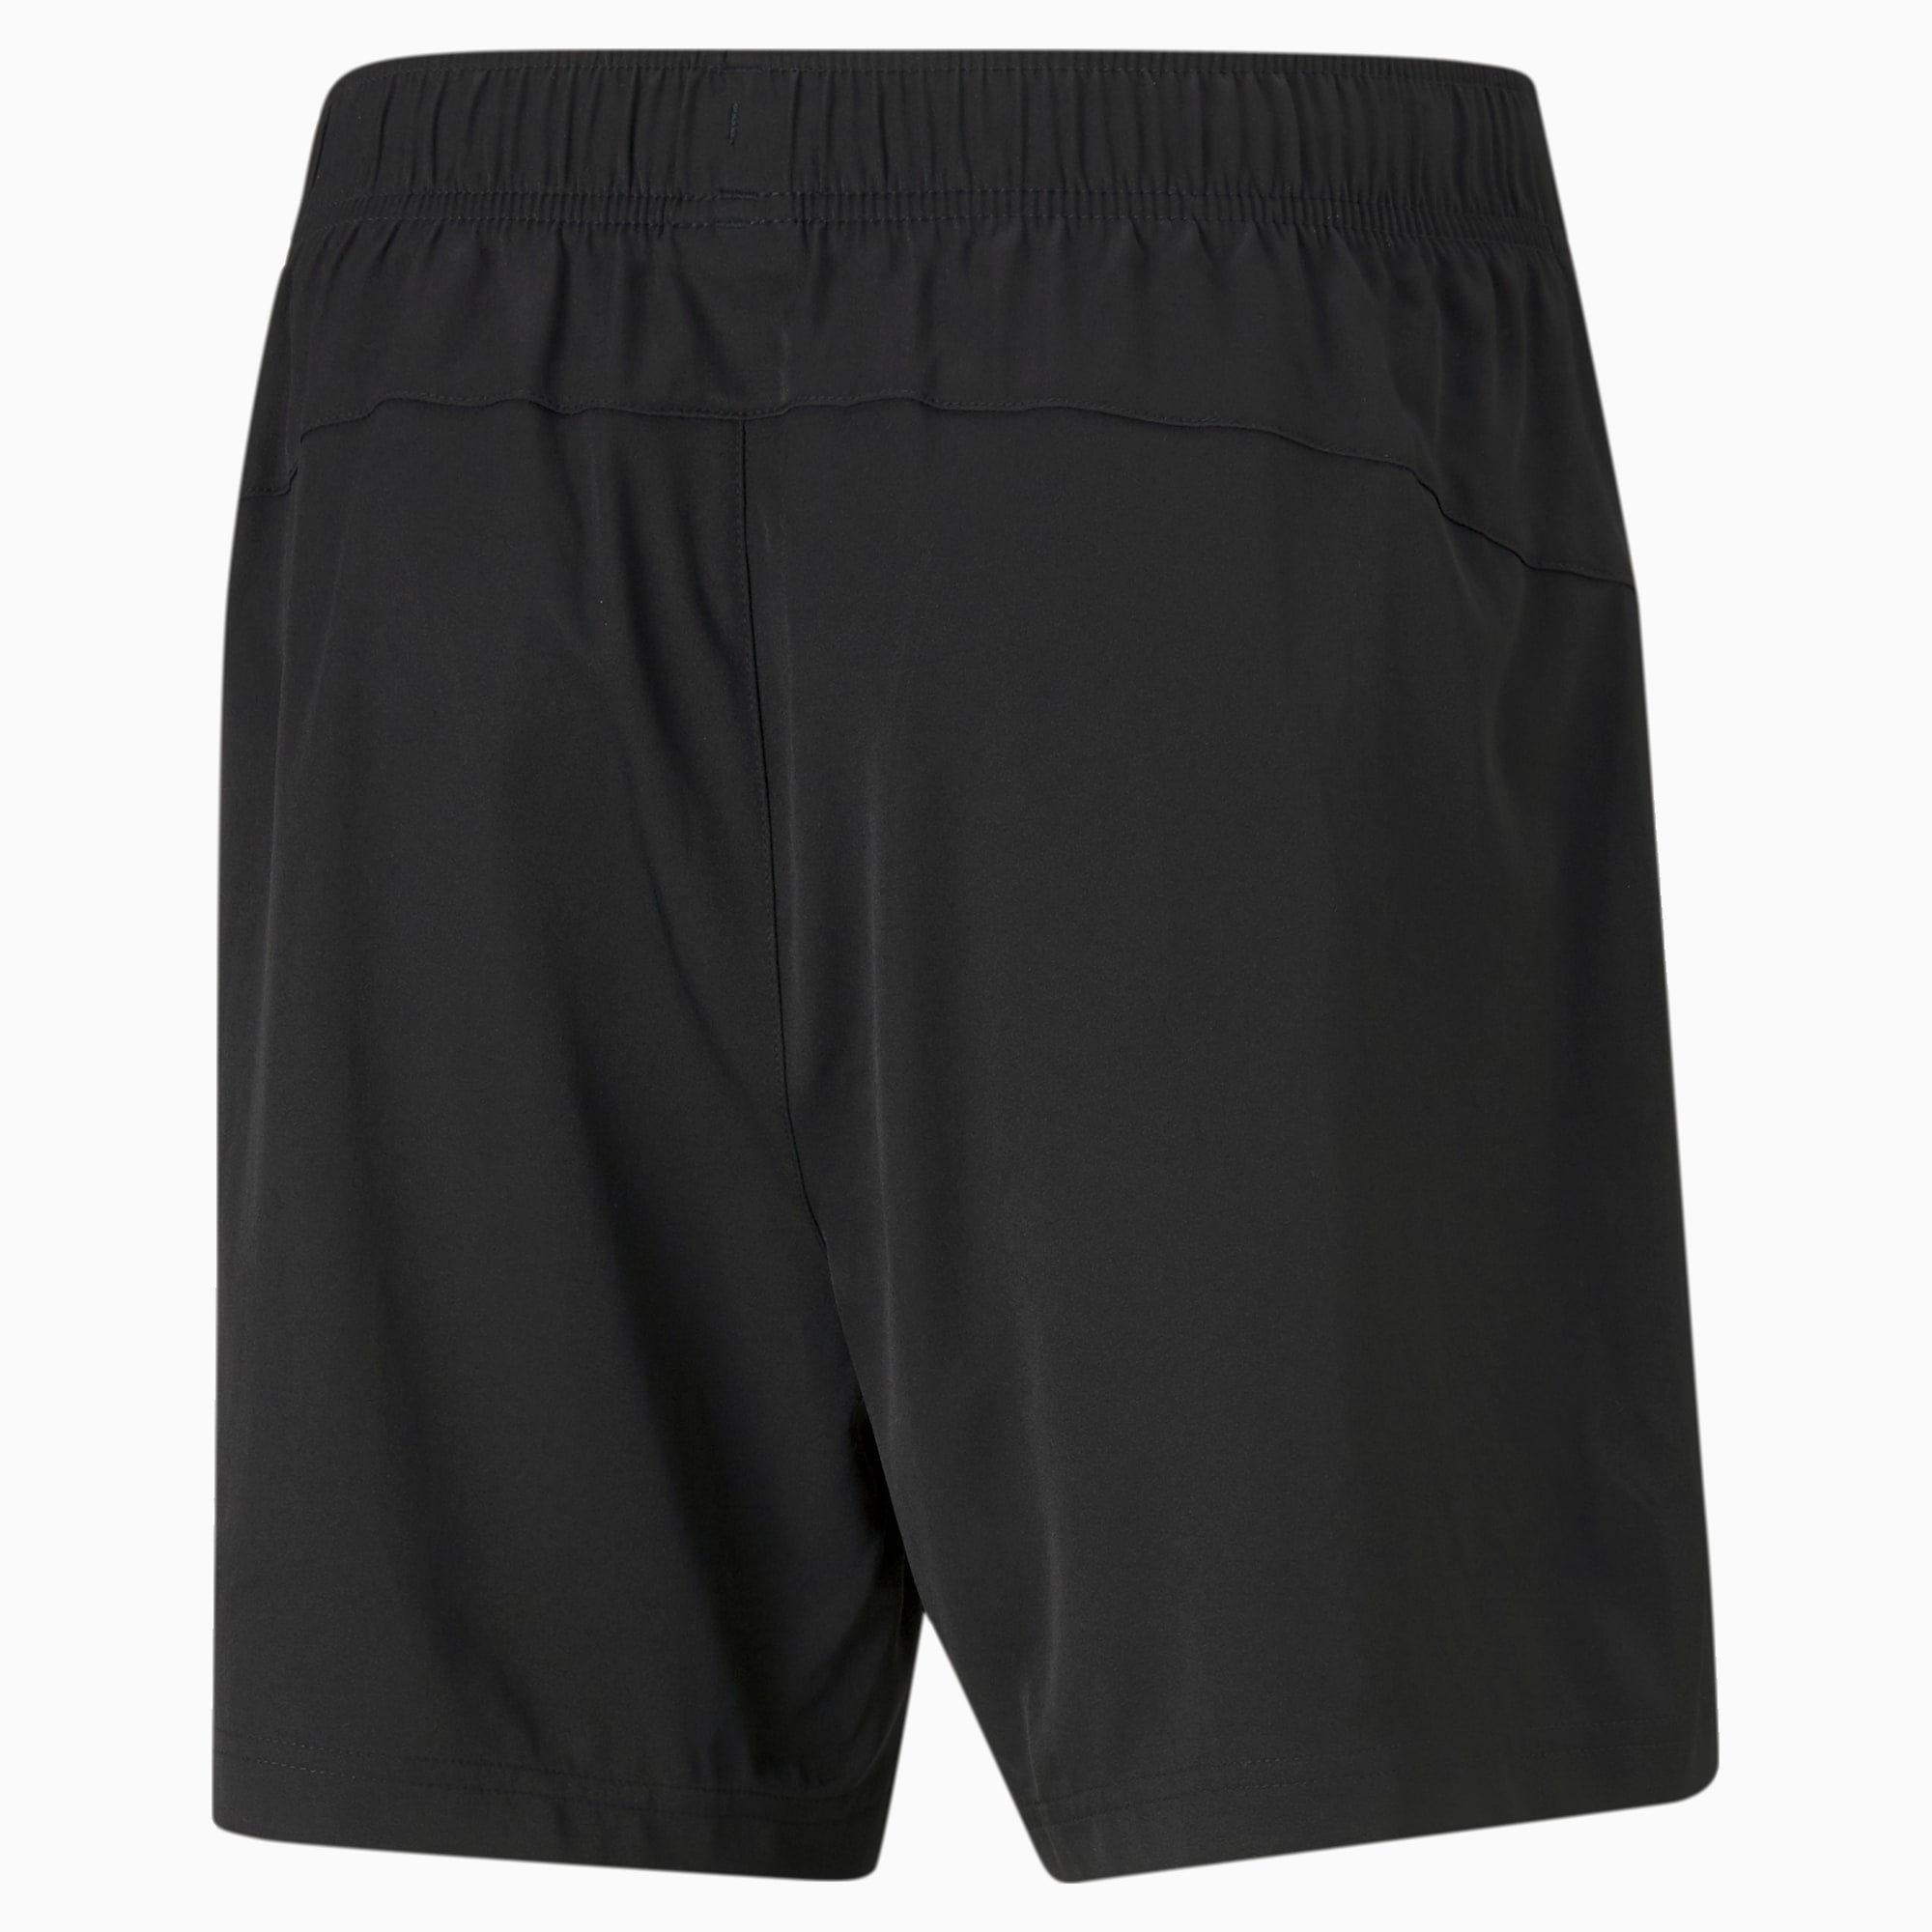 PUMA Active Woven 5 Men's Shorts, Black, Size M, Clothing